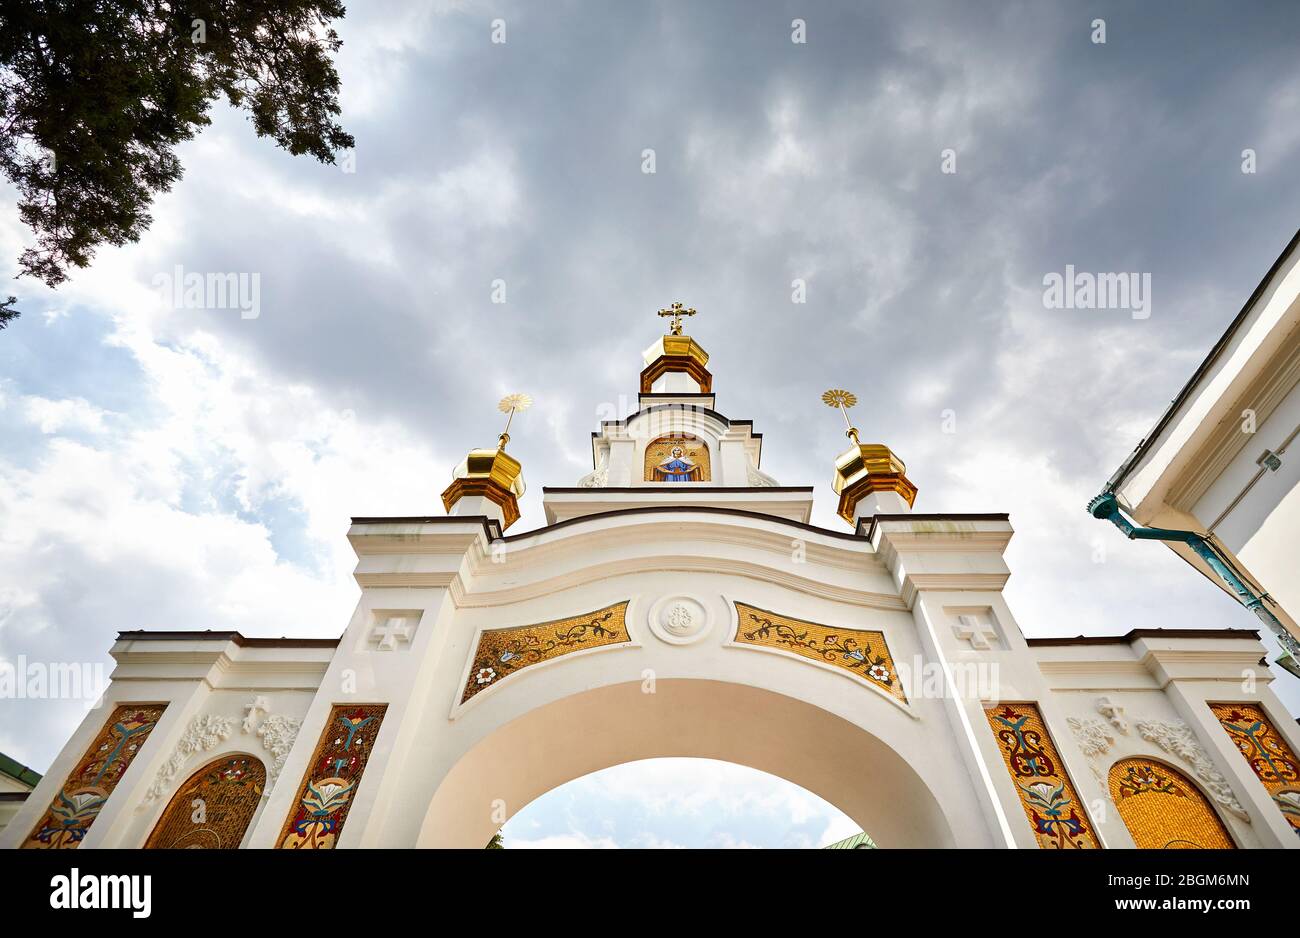 Bogen mit goldenen Kuppeln in Kiew Pechersk Lavra Christian komplexe gegen bewölkten Himmel. Alte historische Architektur in Kiew, Ukraine Stockfoto